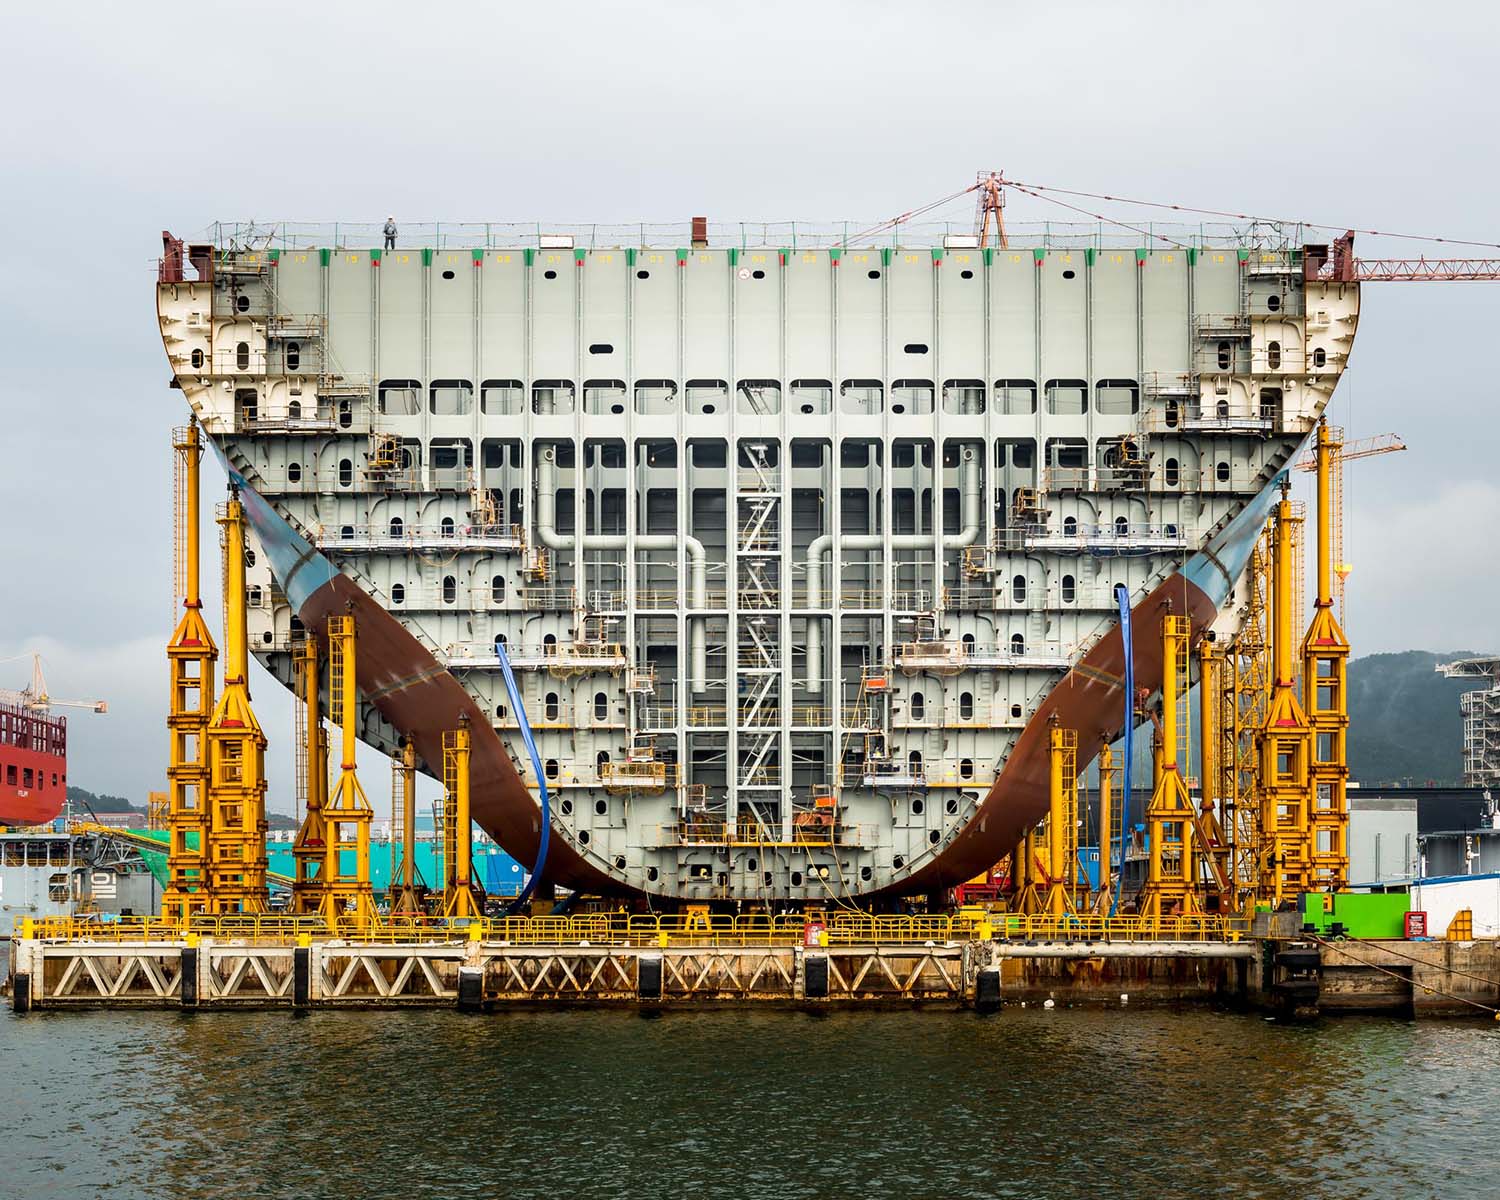 Maersk Triple E集装箱正在建设中；Daewoo造船与海洋工程，韩国